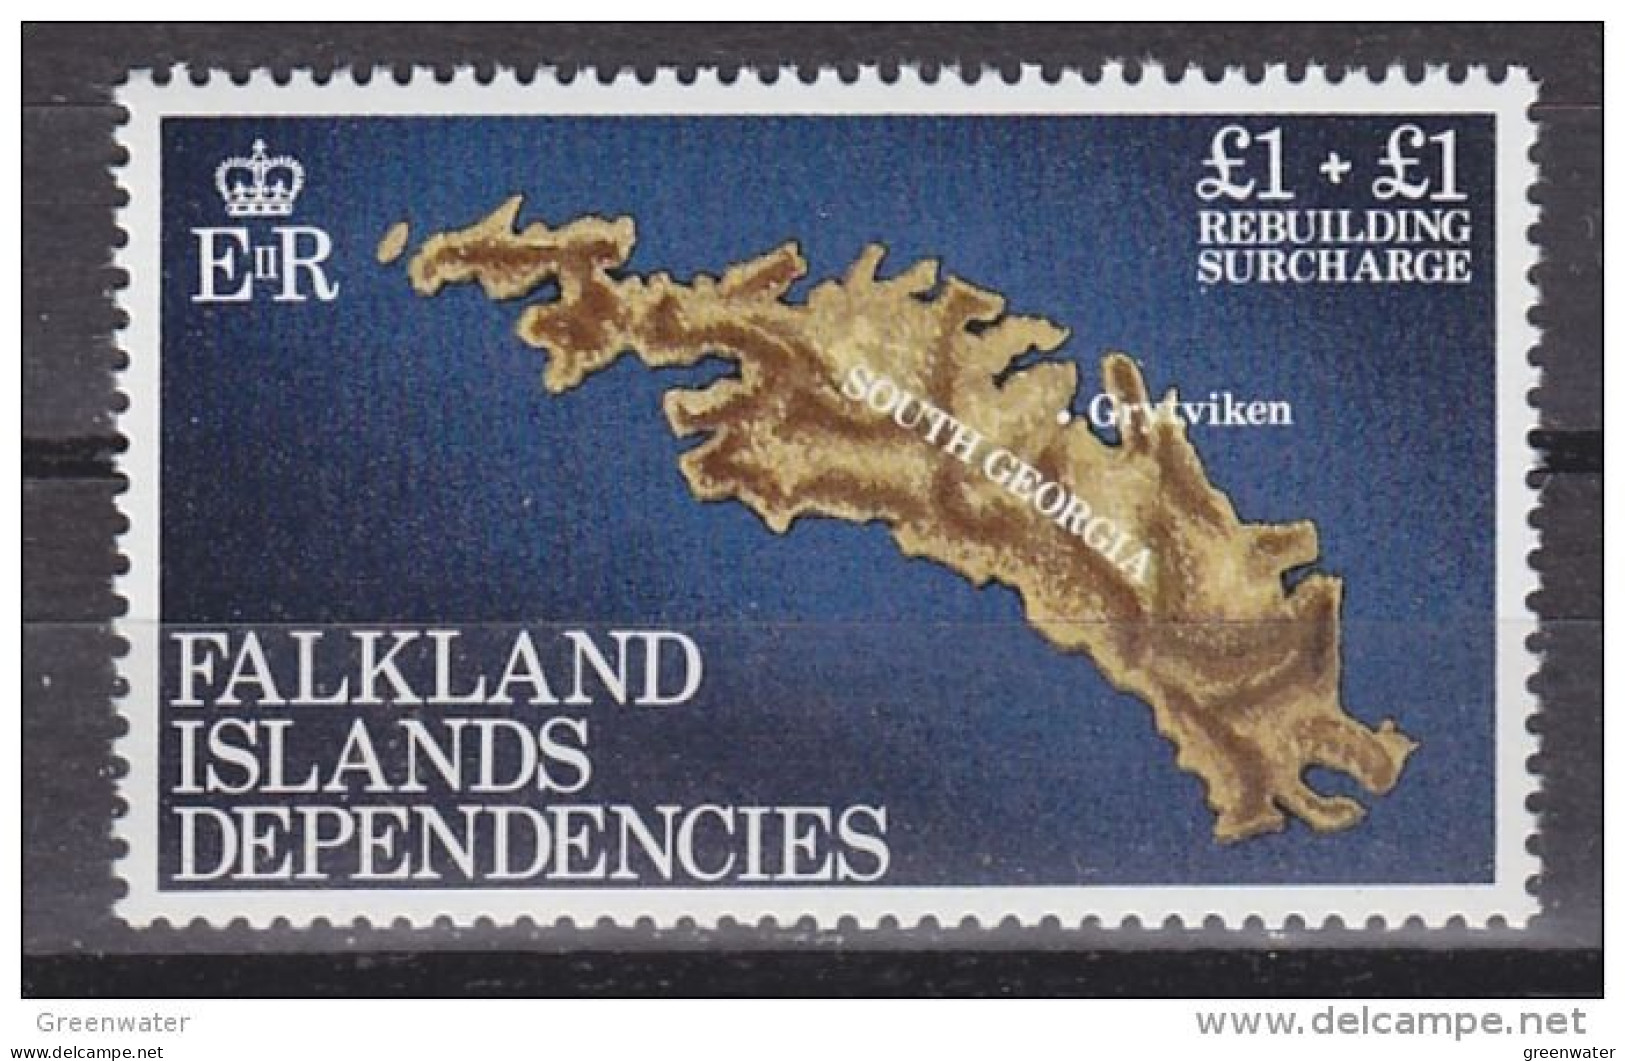 Falkland Islands Dependencies (FID) 1982 Rebuilding Fund 1v  ** Mnh (59843) - South Georgia